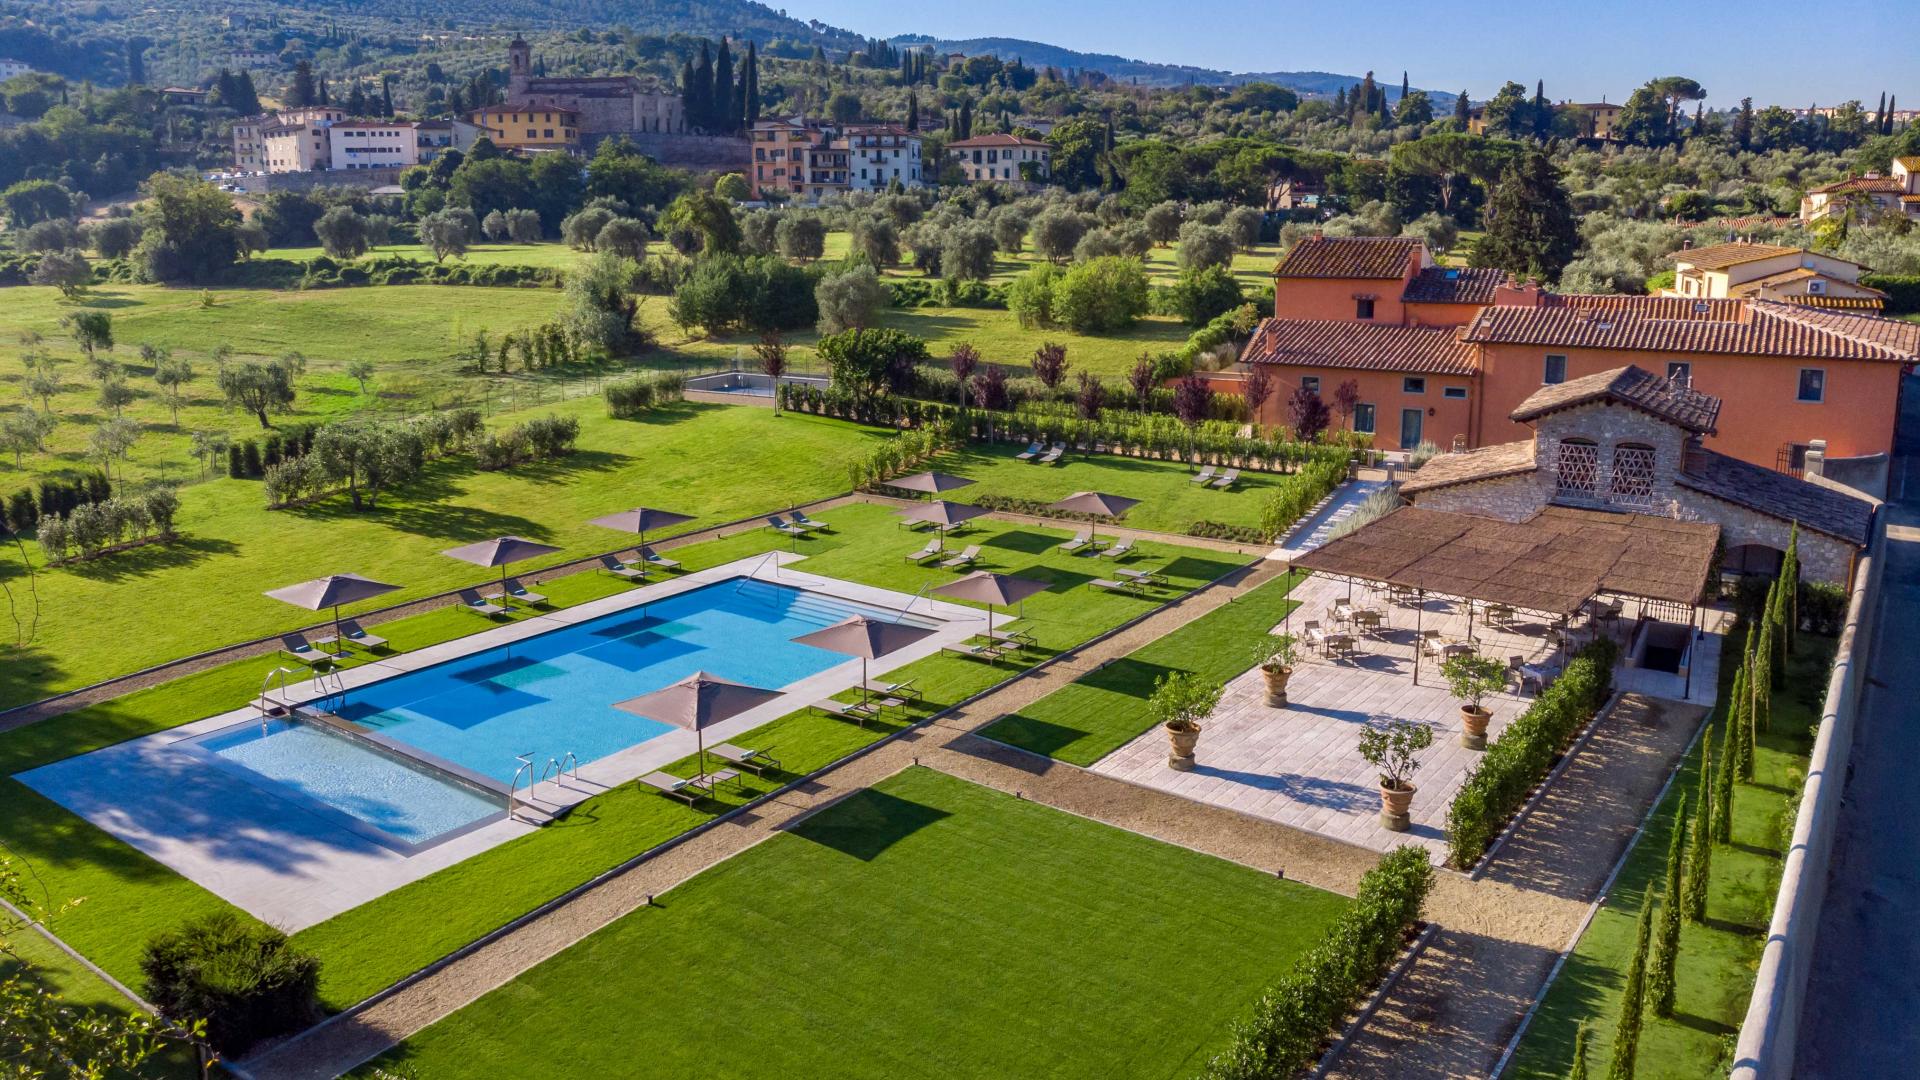 Florence Travel guide: Villa La Massa's pool and grounds